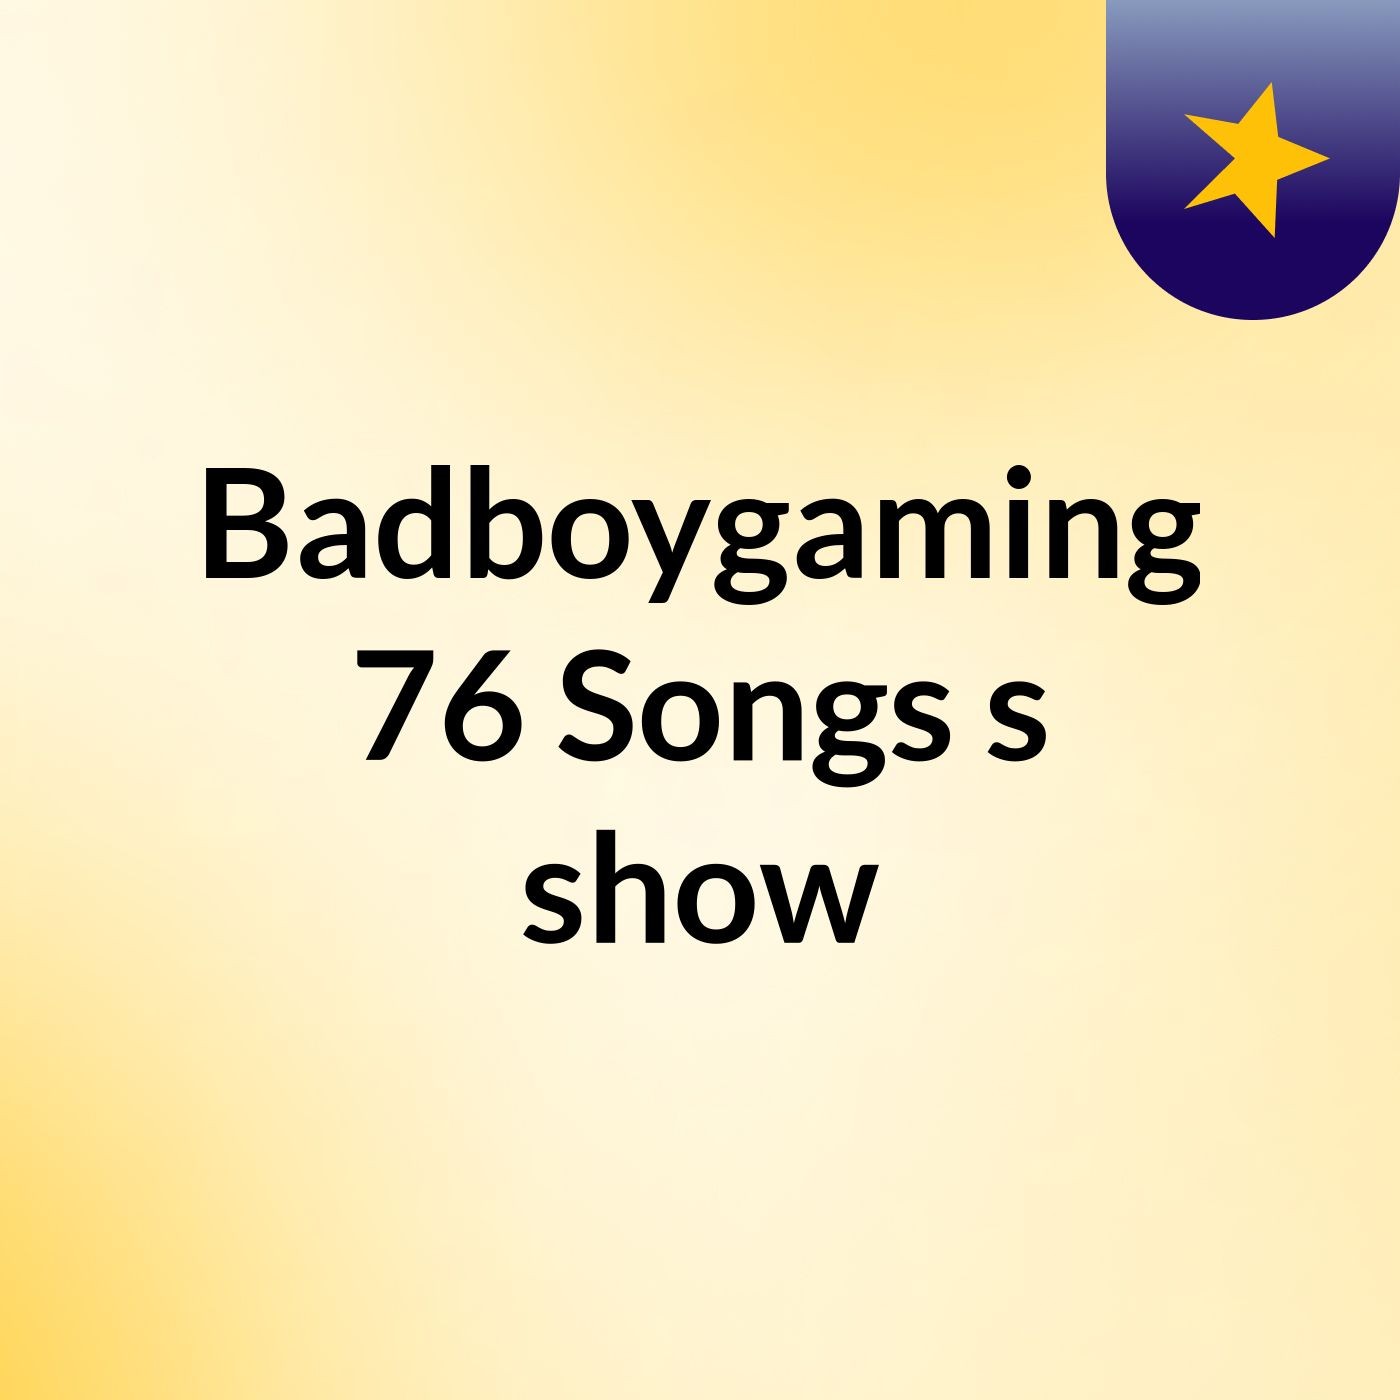 Badboygaming 76 Songs's show